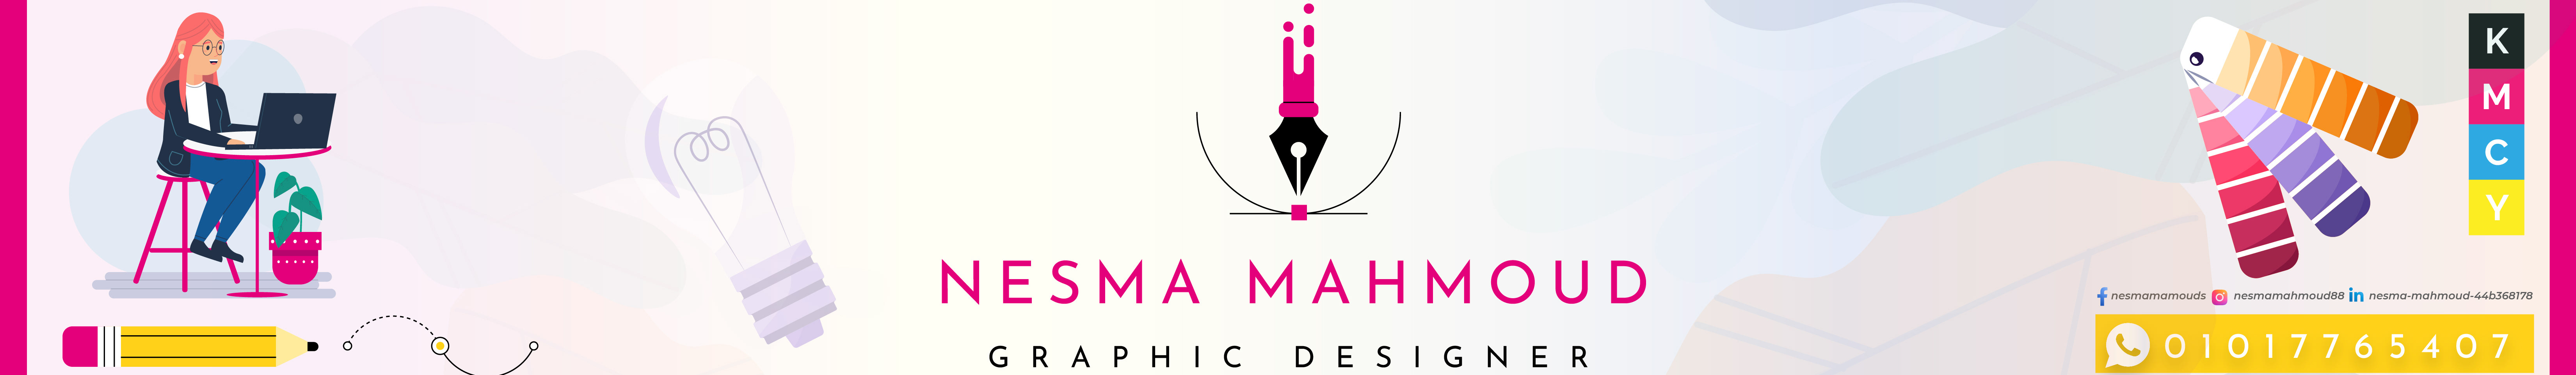 Profil-Banner von Nessma Mahmoud